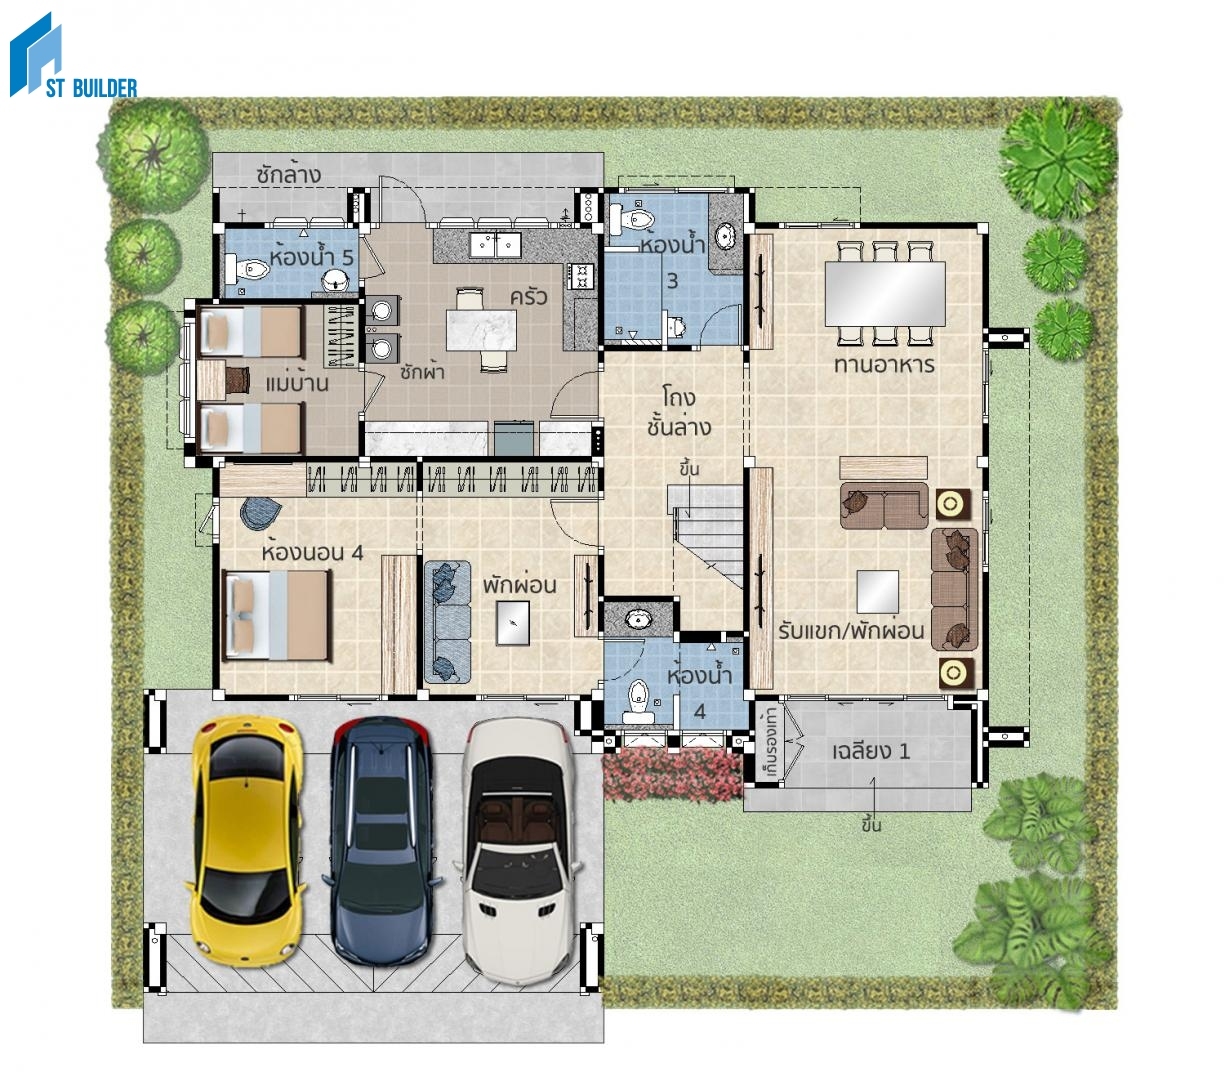 STE-206 Floor Plan 1